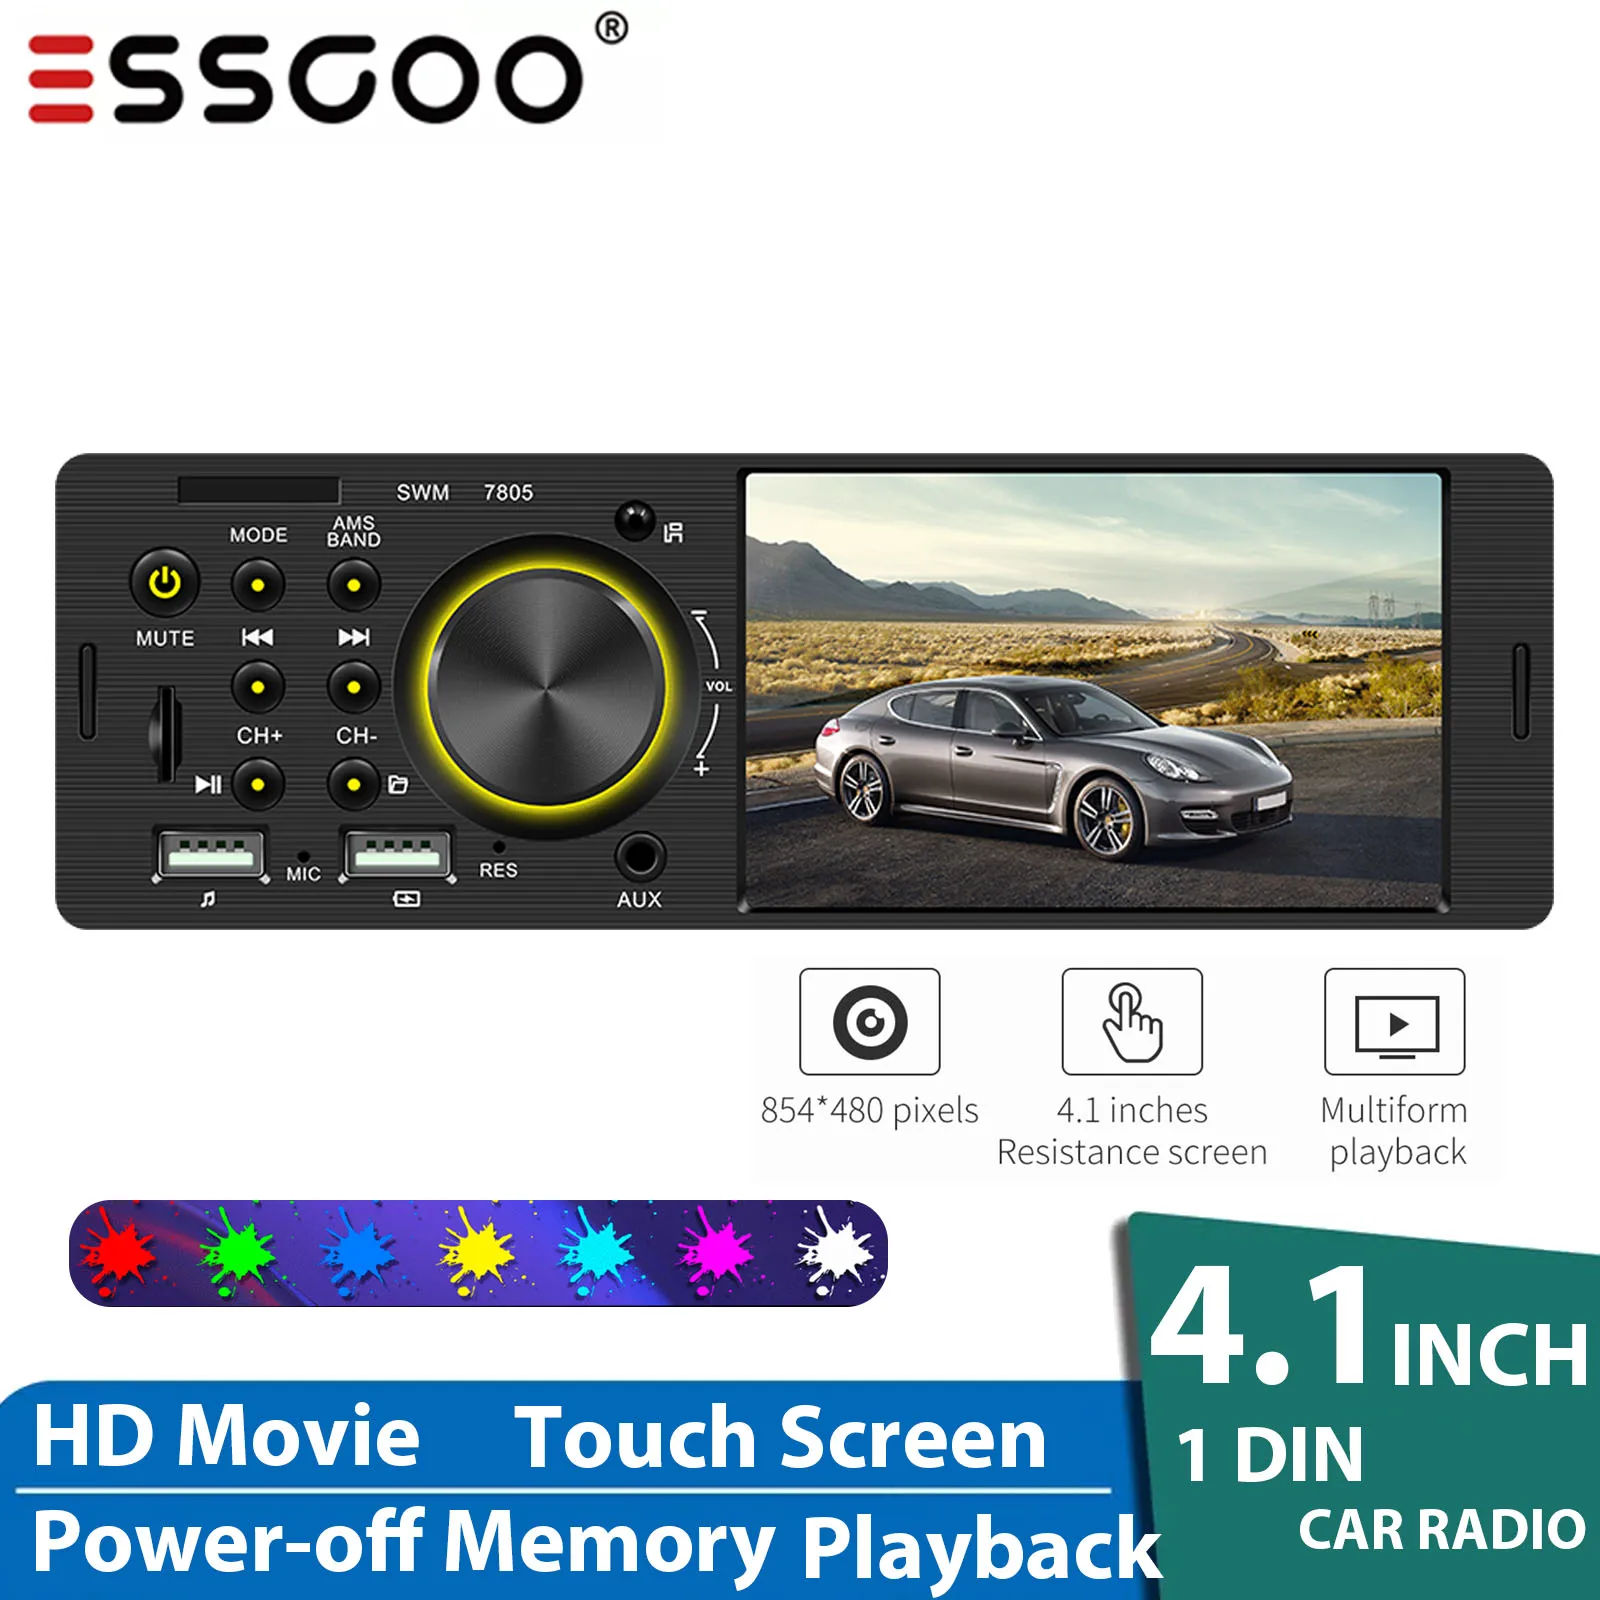 

ESSGOO Car radio 1 Din HD 4.1" Touch Screen MP5 Player Nondestructive Sound AUX Power-off Memory FM Bluetooth Car Autoradio